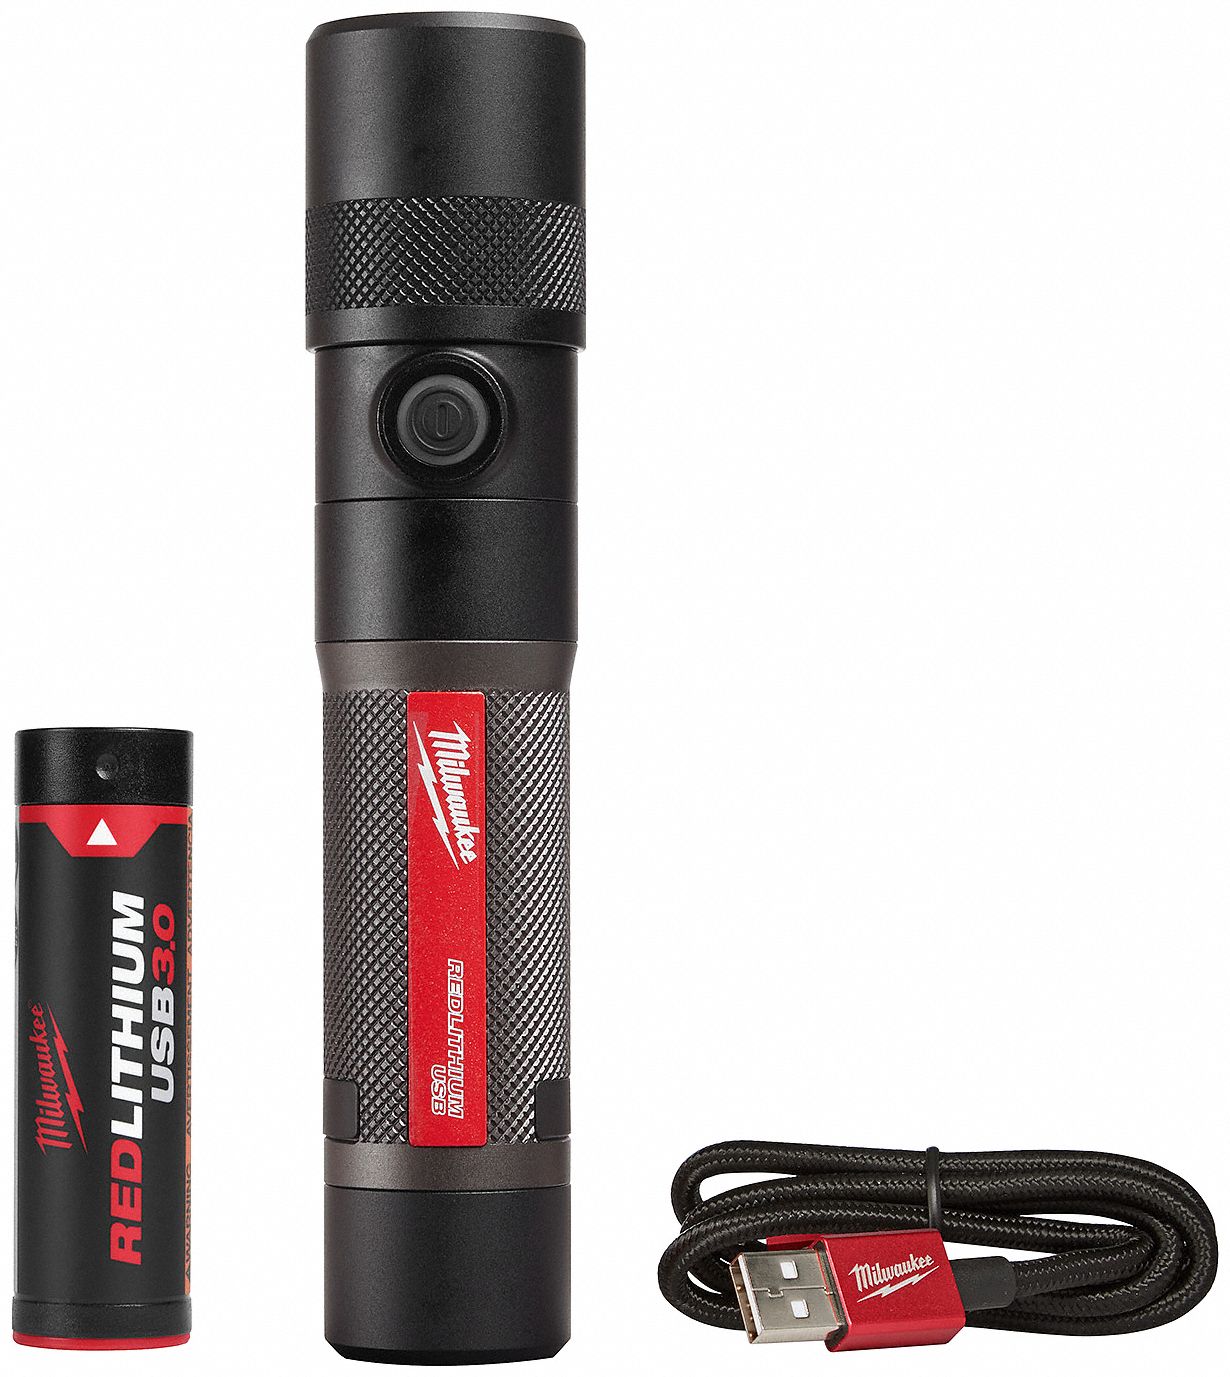 Cordless Flashlight: 1,100 lm Max Brightness, 1.75 hr Run Time at Max Brightness, Black, 1 Batteries